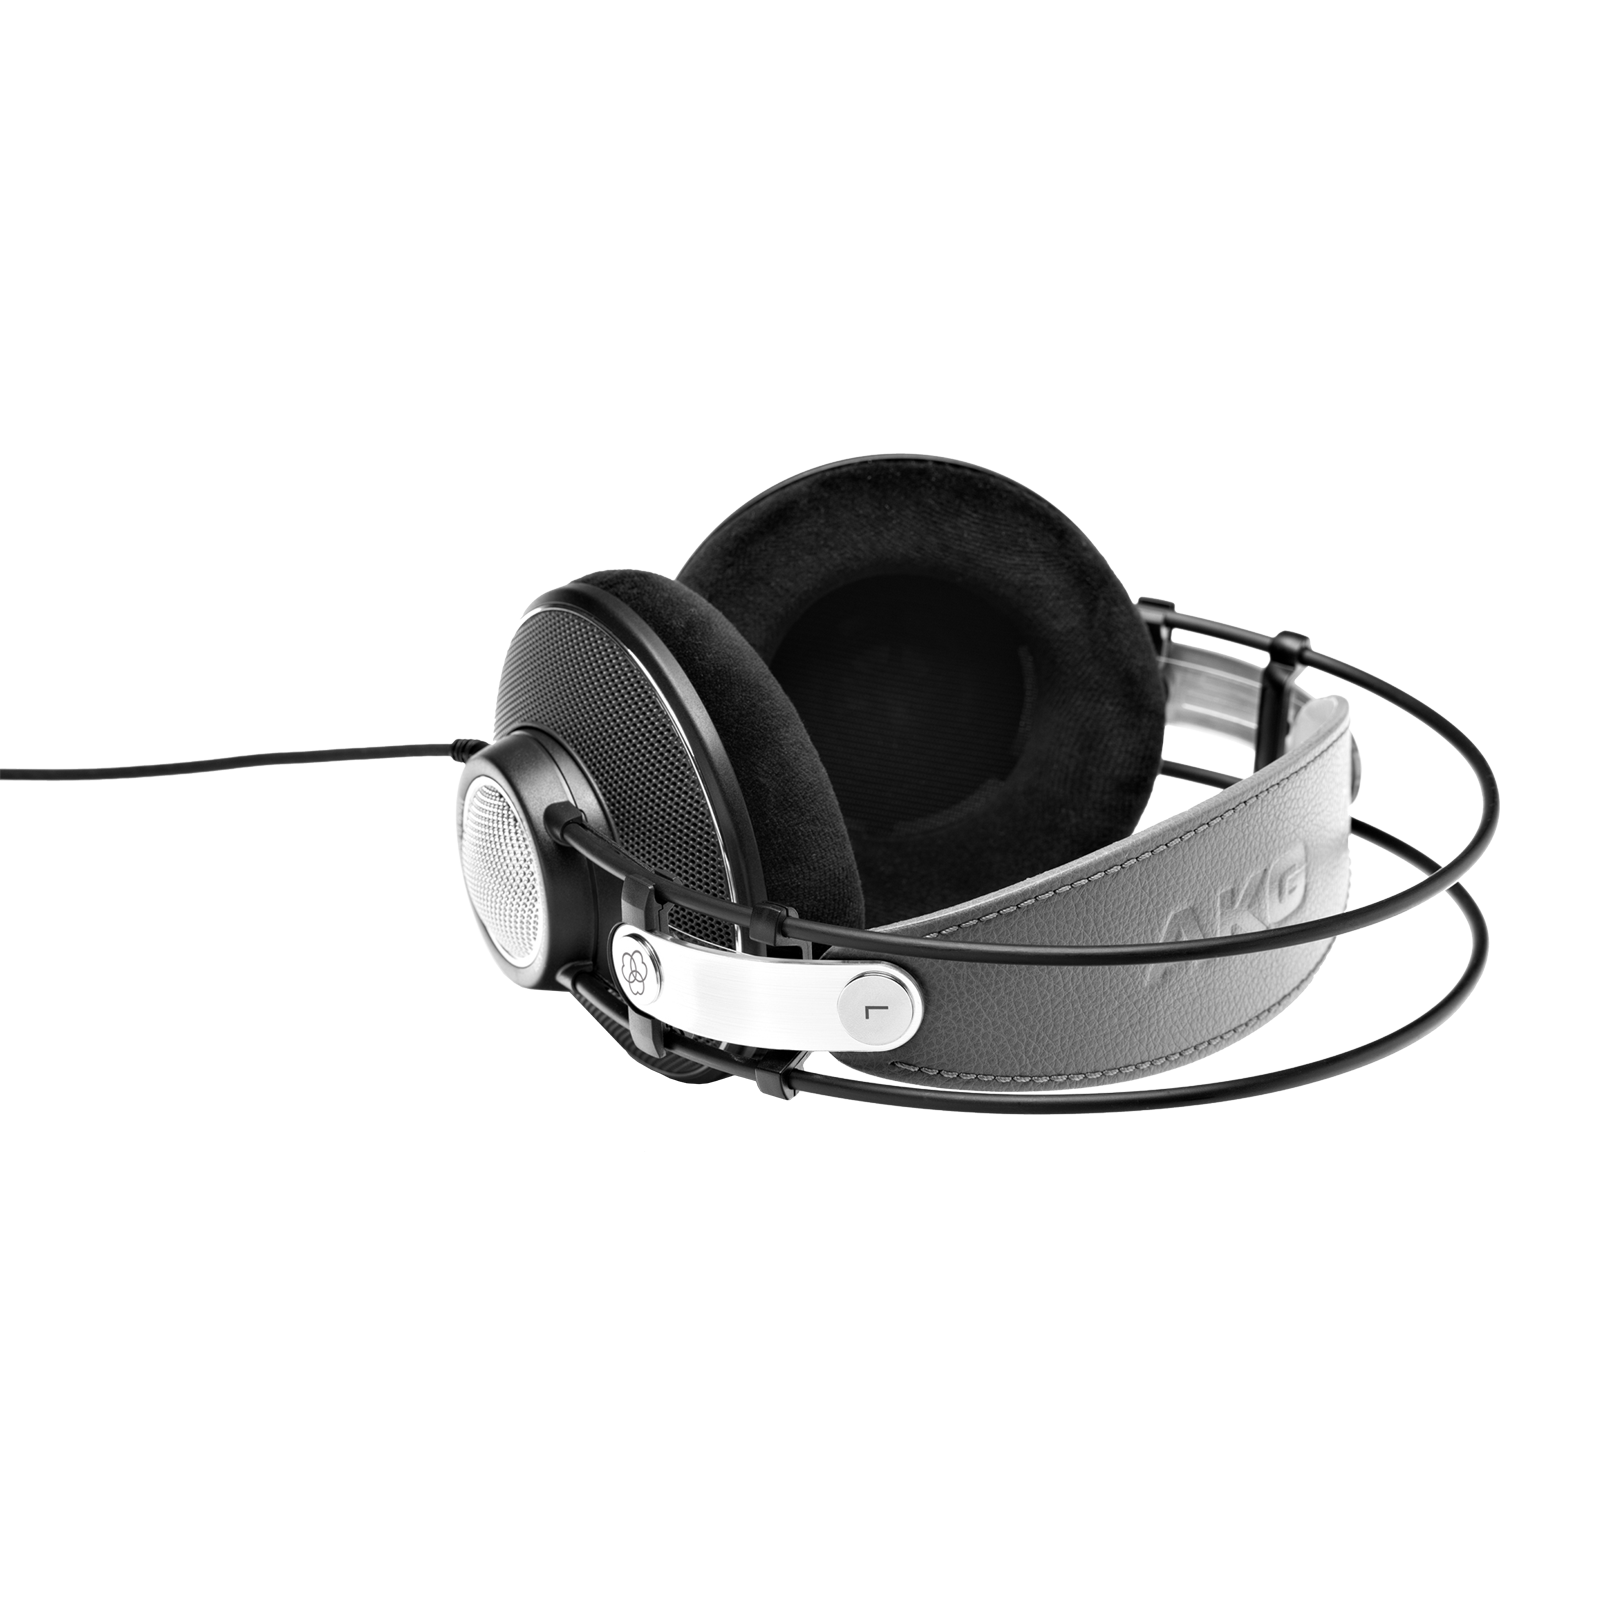 K612 PRO - Black - Reference studio headphones - Detailshot 1